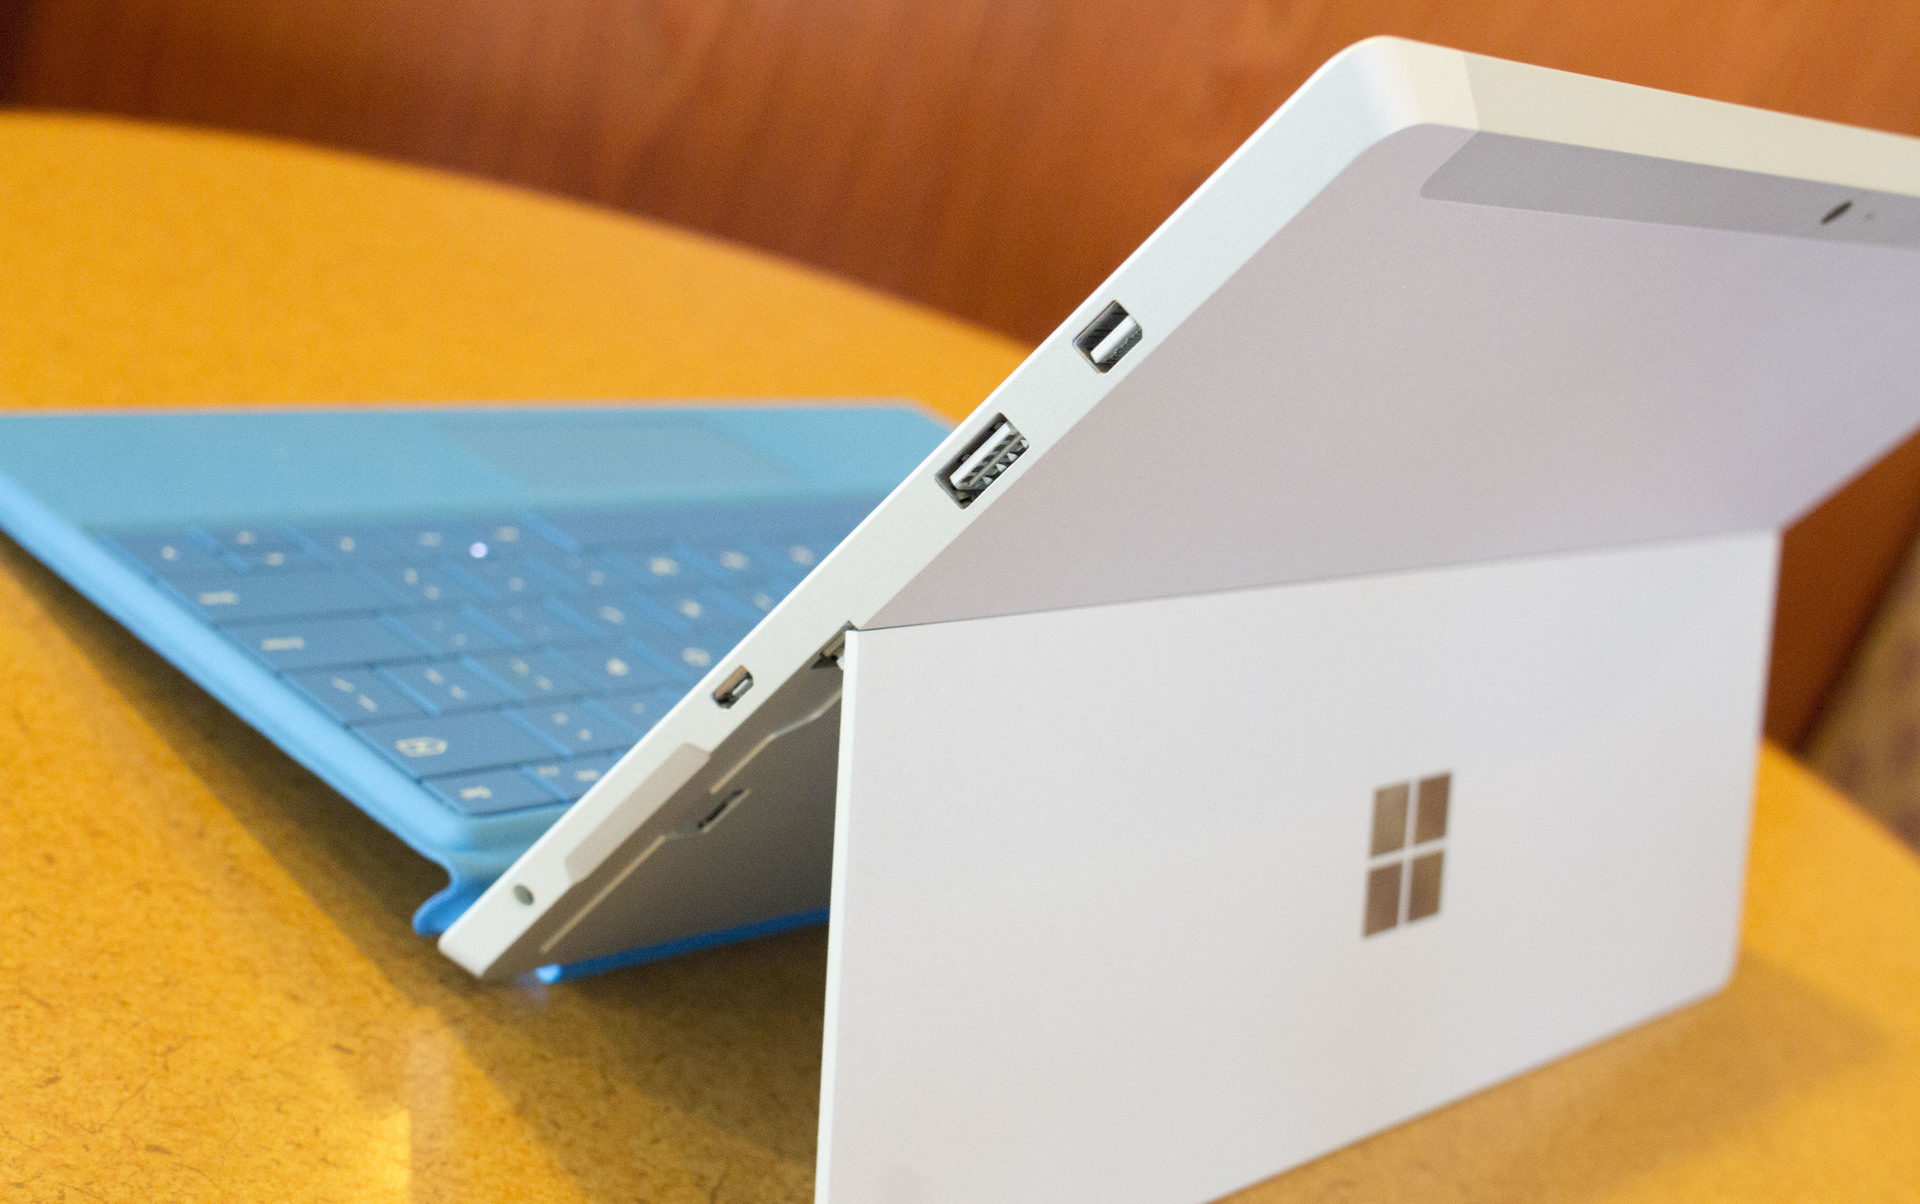 Microsoft Surface Book 3 specs